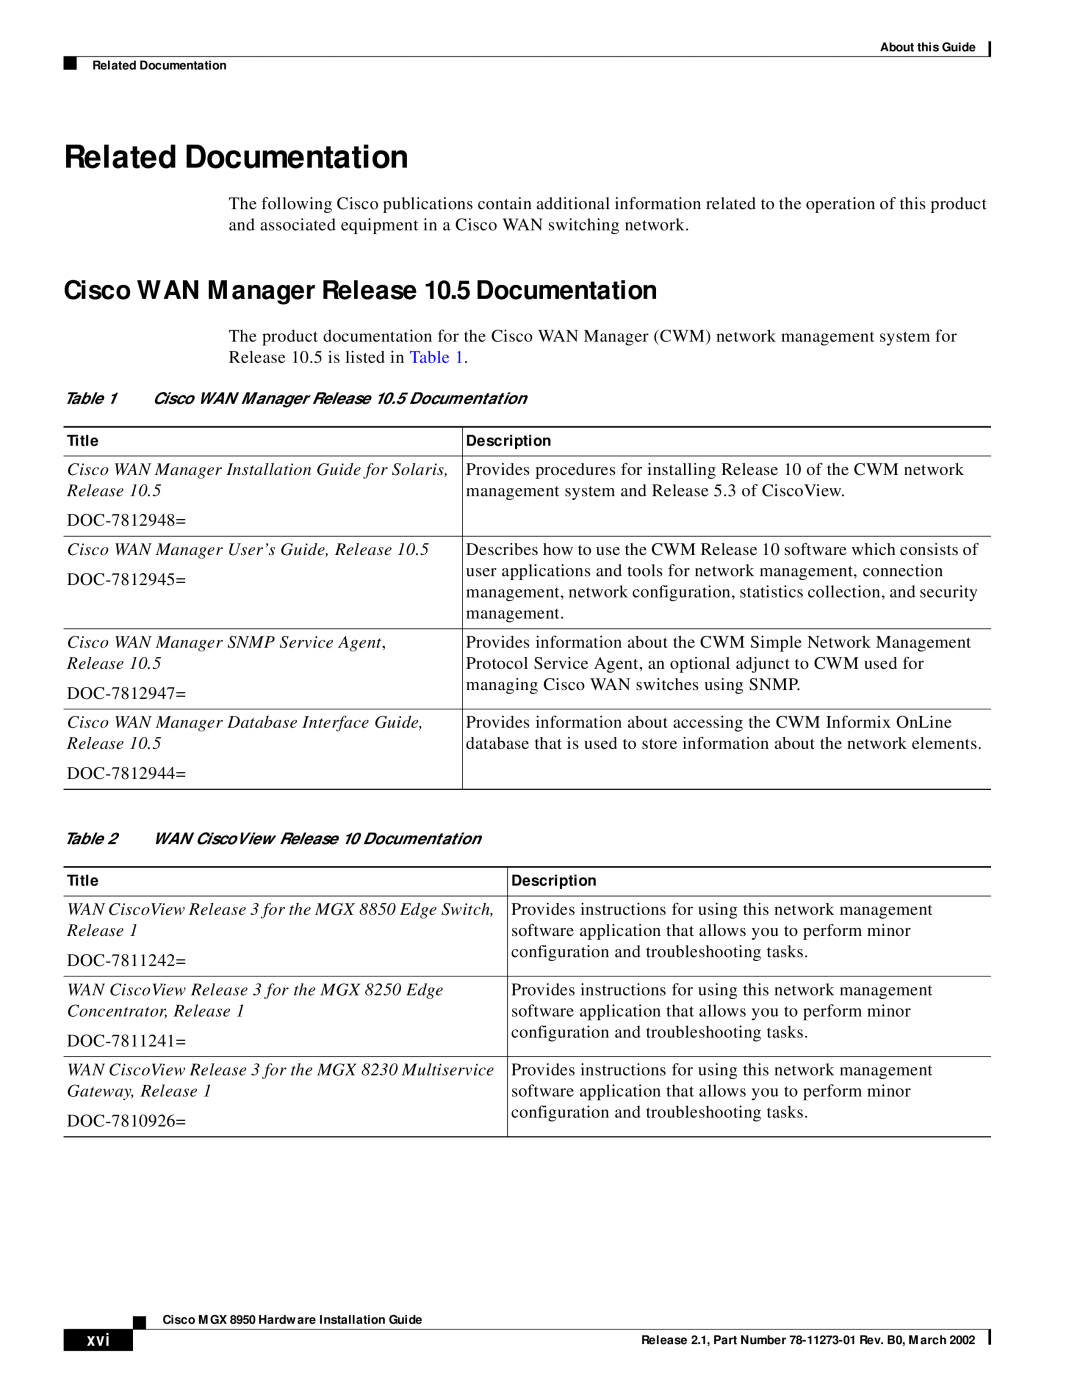 Cisco Systems MGX 8950 appendix Related Documentation, Cisco WAN Manager Release 10.5 Documentation, Title, Description 